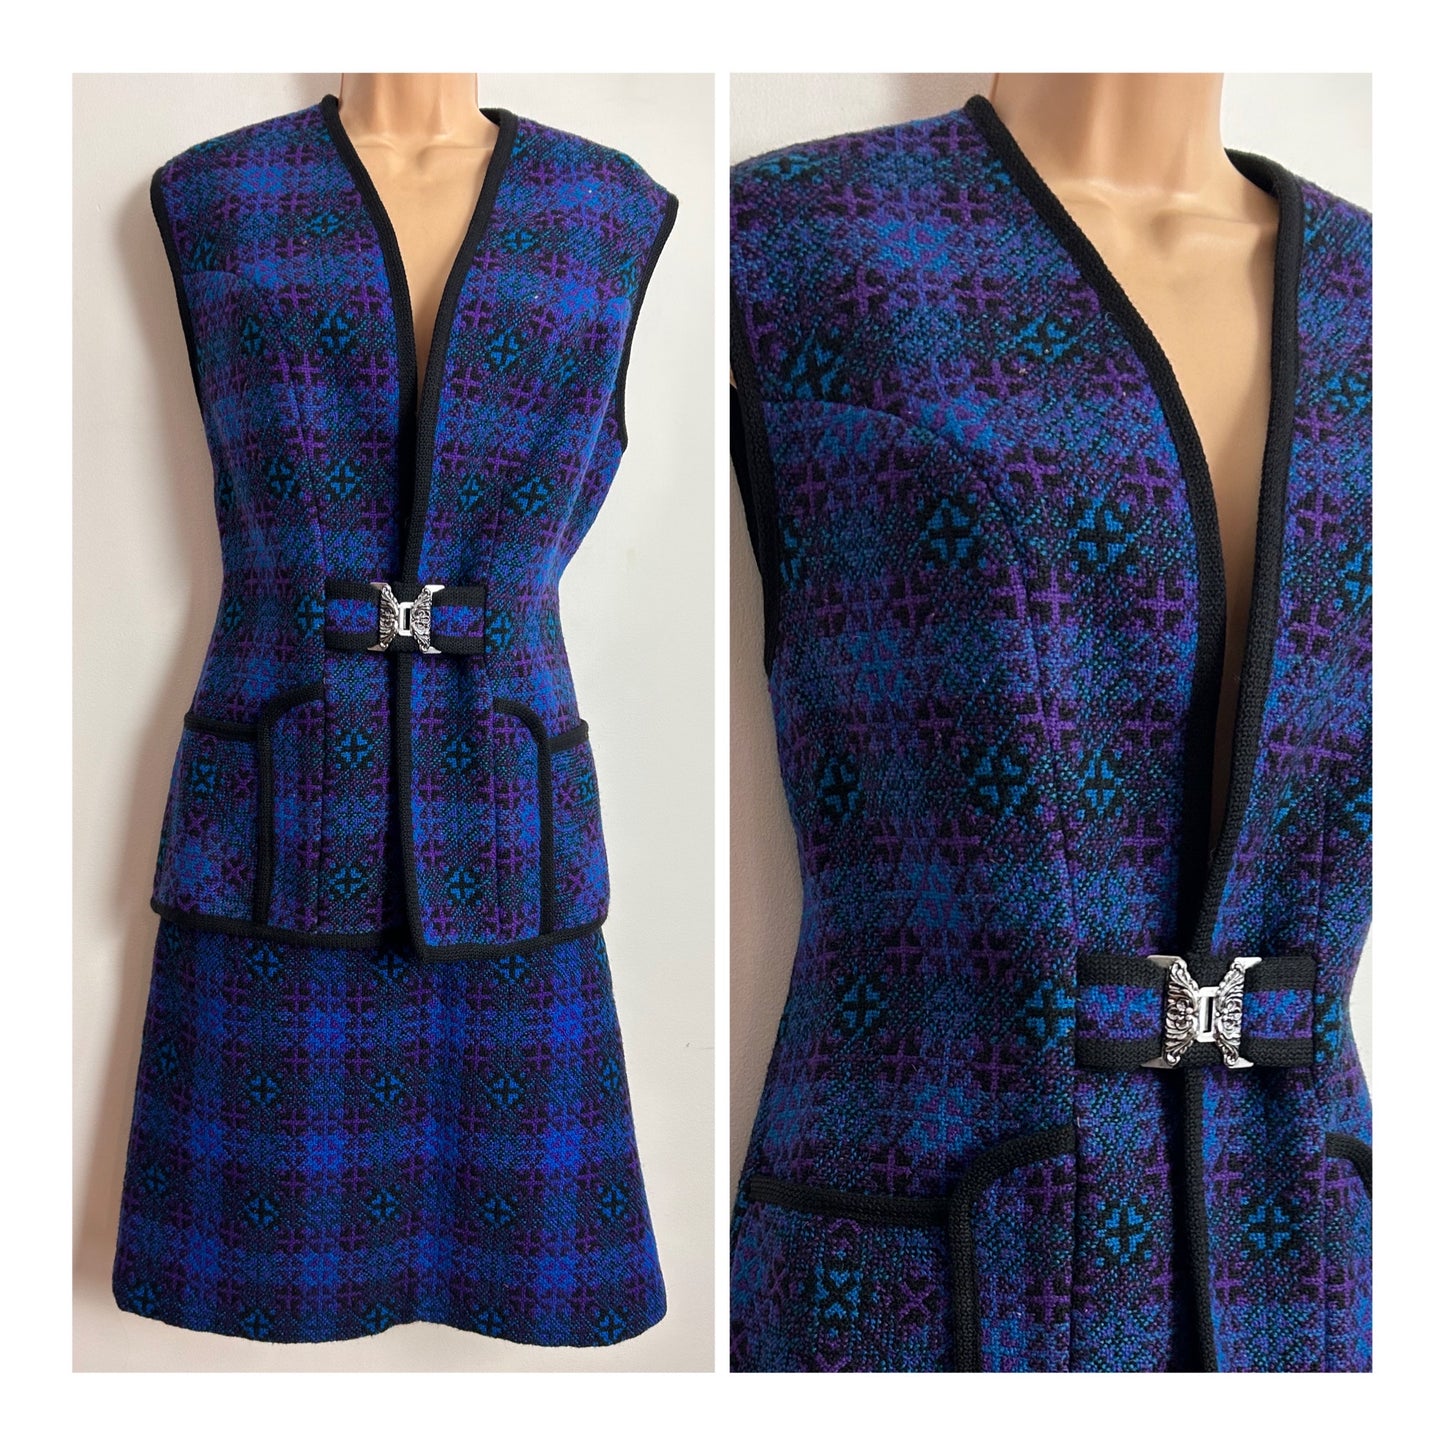 Vintage 1960s UK Size 14 Blue Black & Purple Welsh Tapestry Two Piece Set Skirt & Gilet Waistcoat Suit